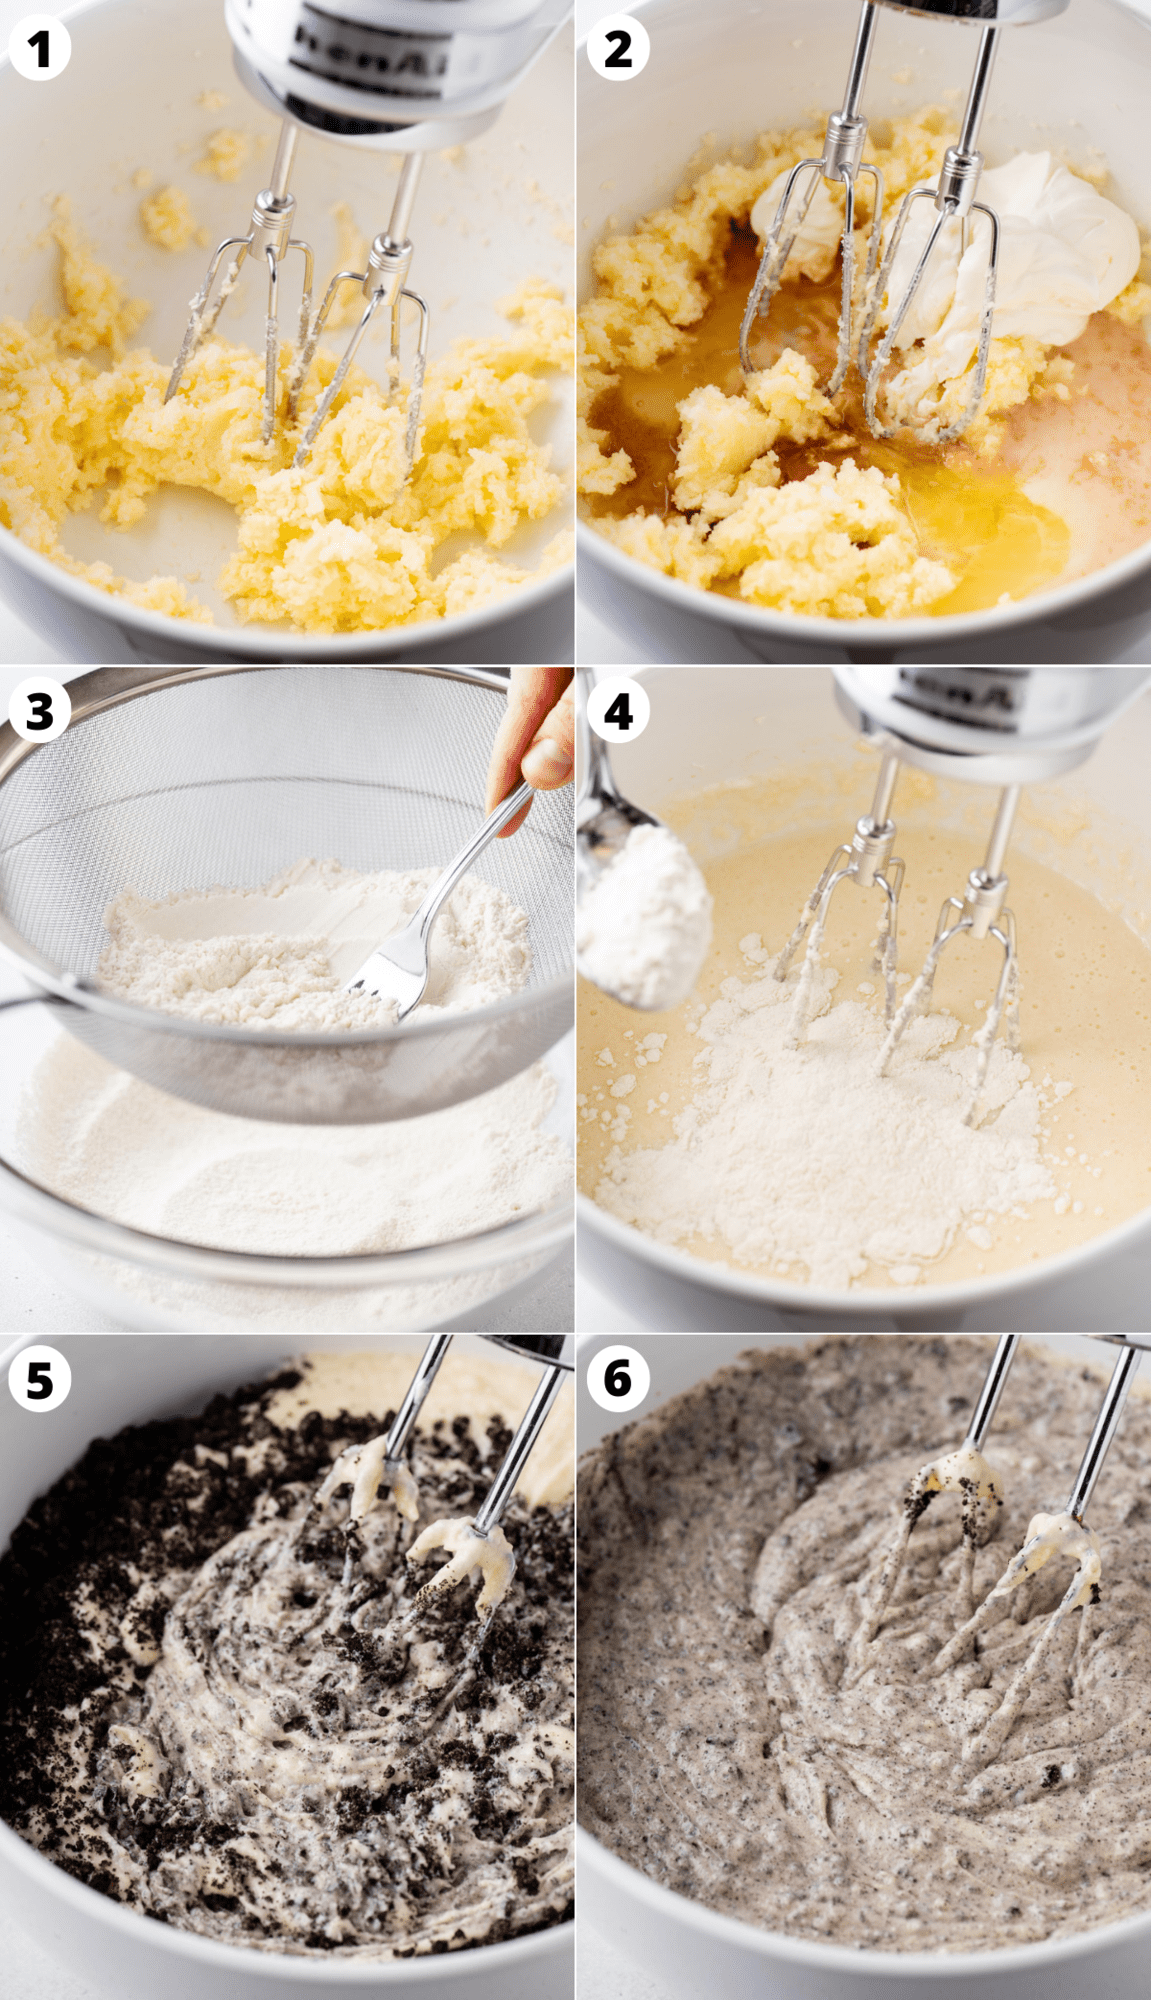 6 photos showing process of making Oreo cake batter